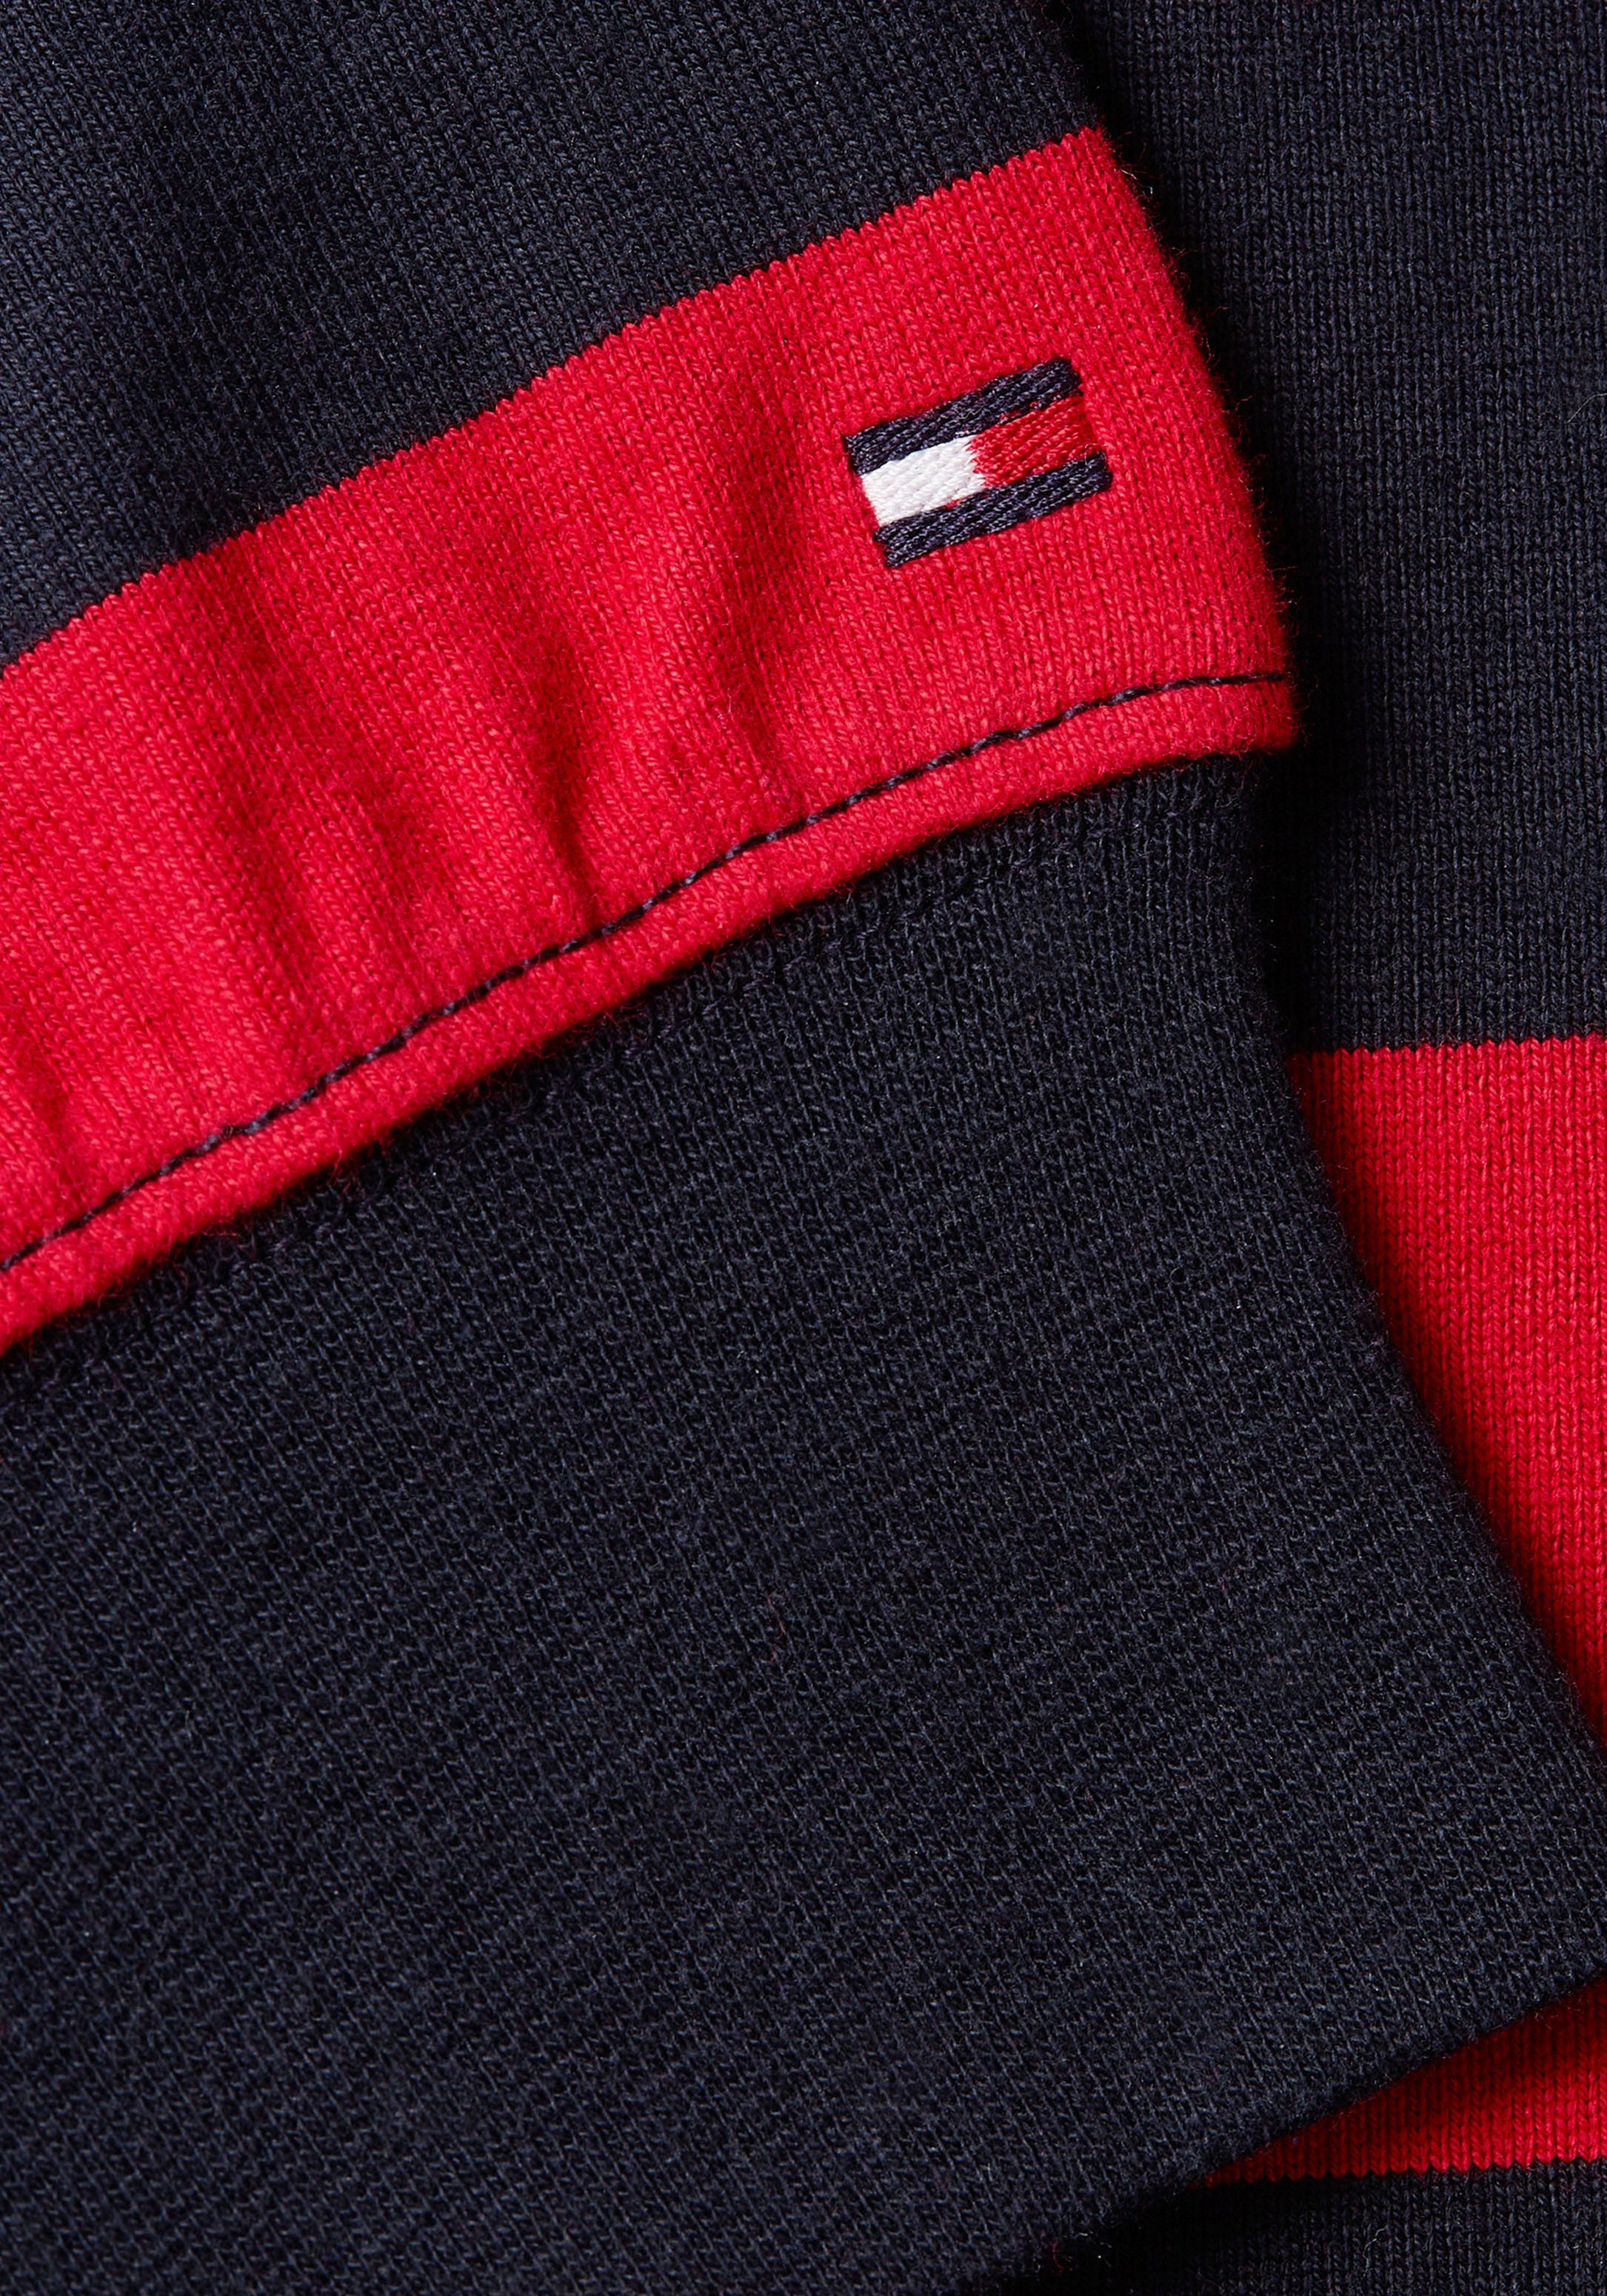 Tommy Hilfiger Primary BLOCK STRIPED Streifendesign Sky Sweater im RUGBY Red/Desert